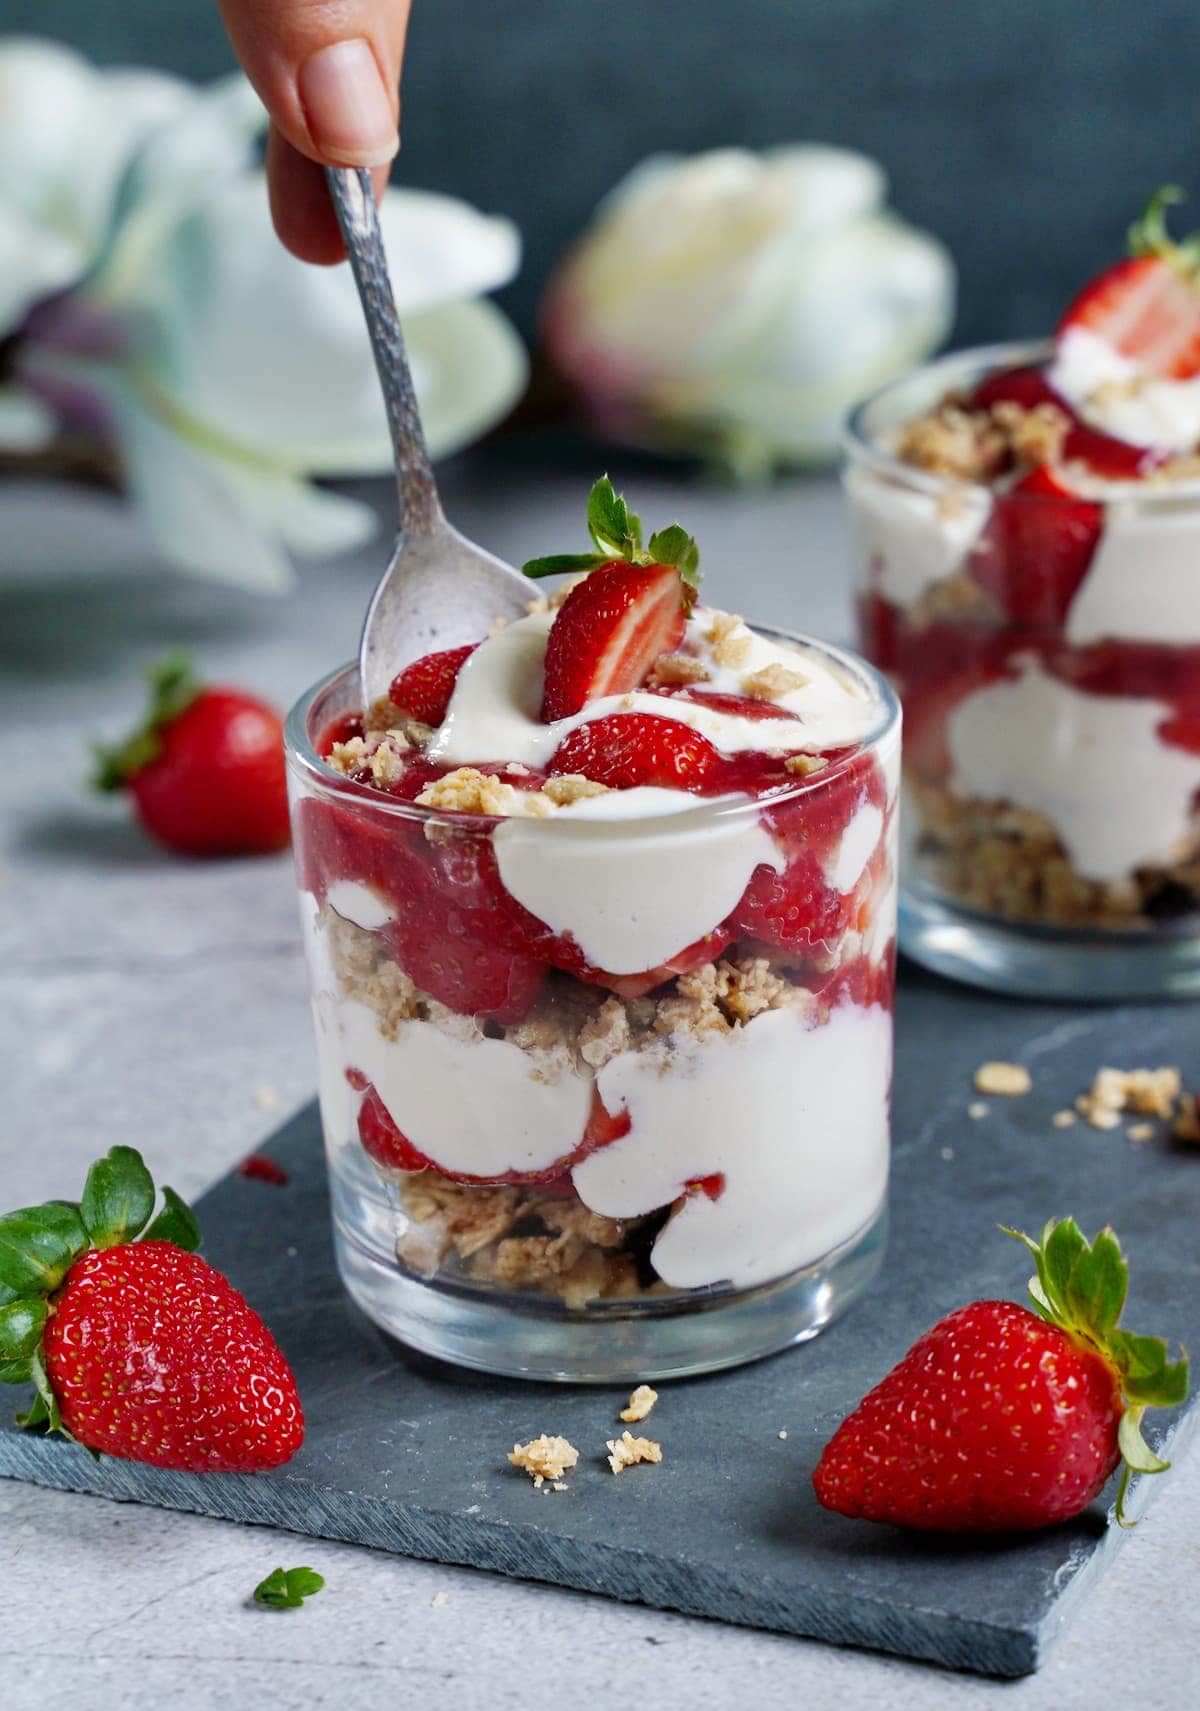 spoon submerged in strawberry parfait with yogurt